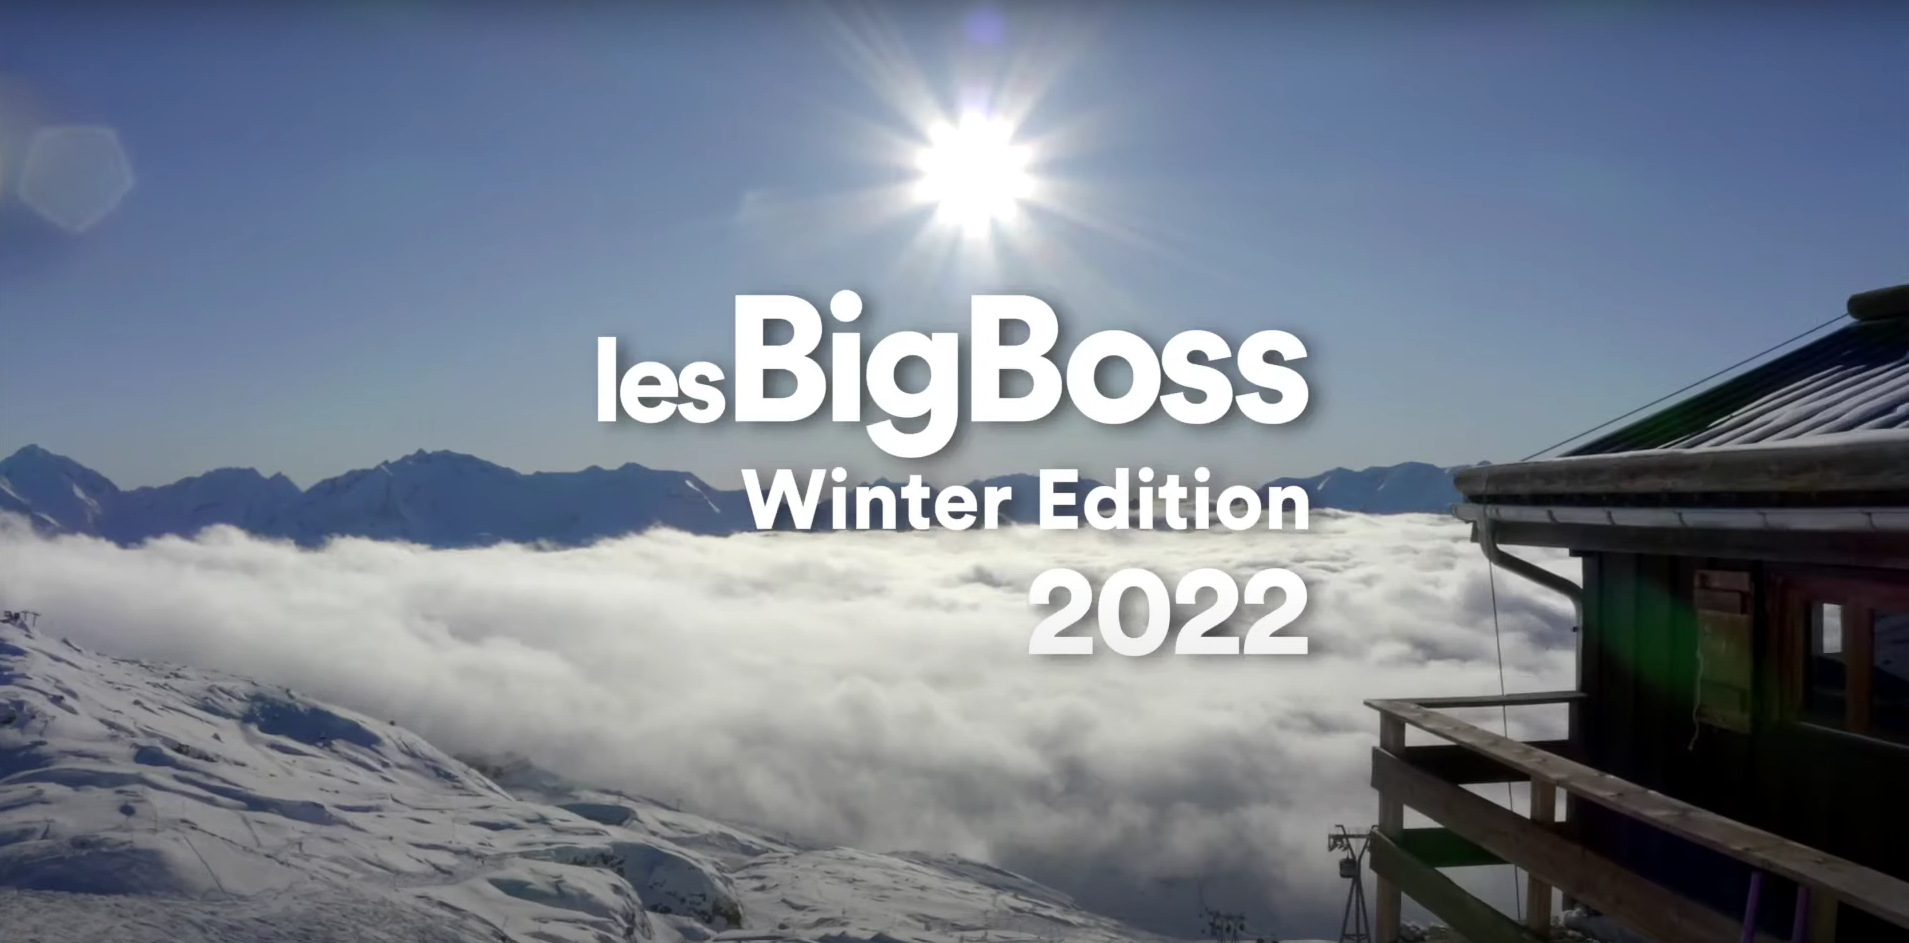 Winter Edition 2022